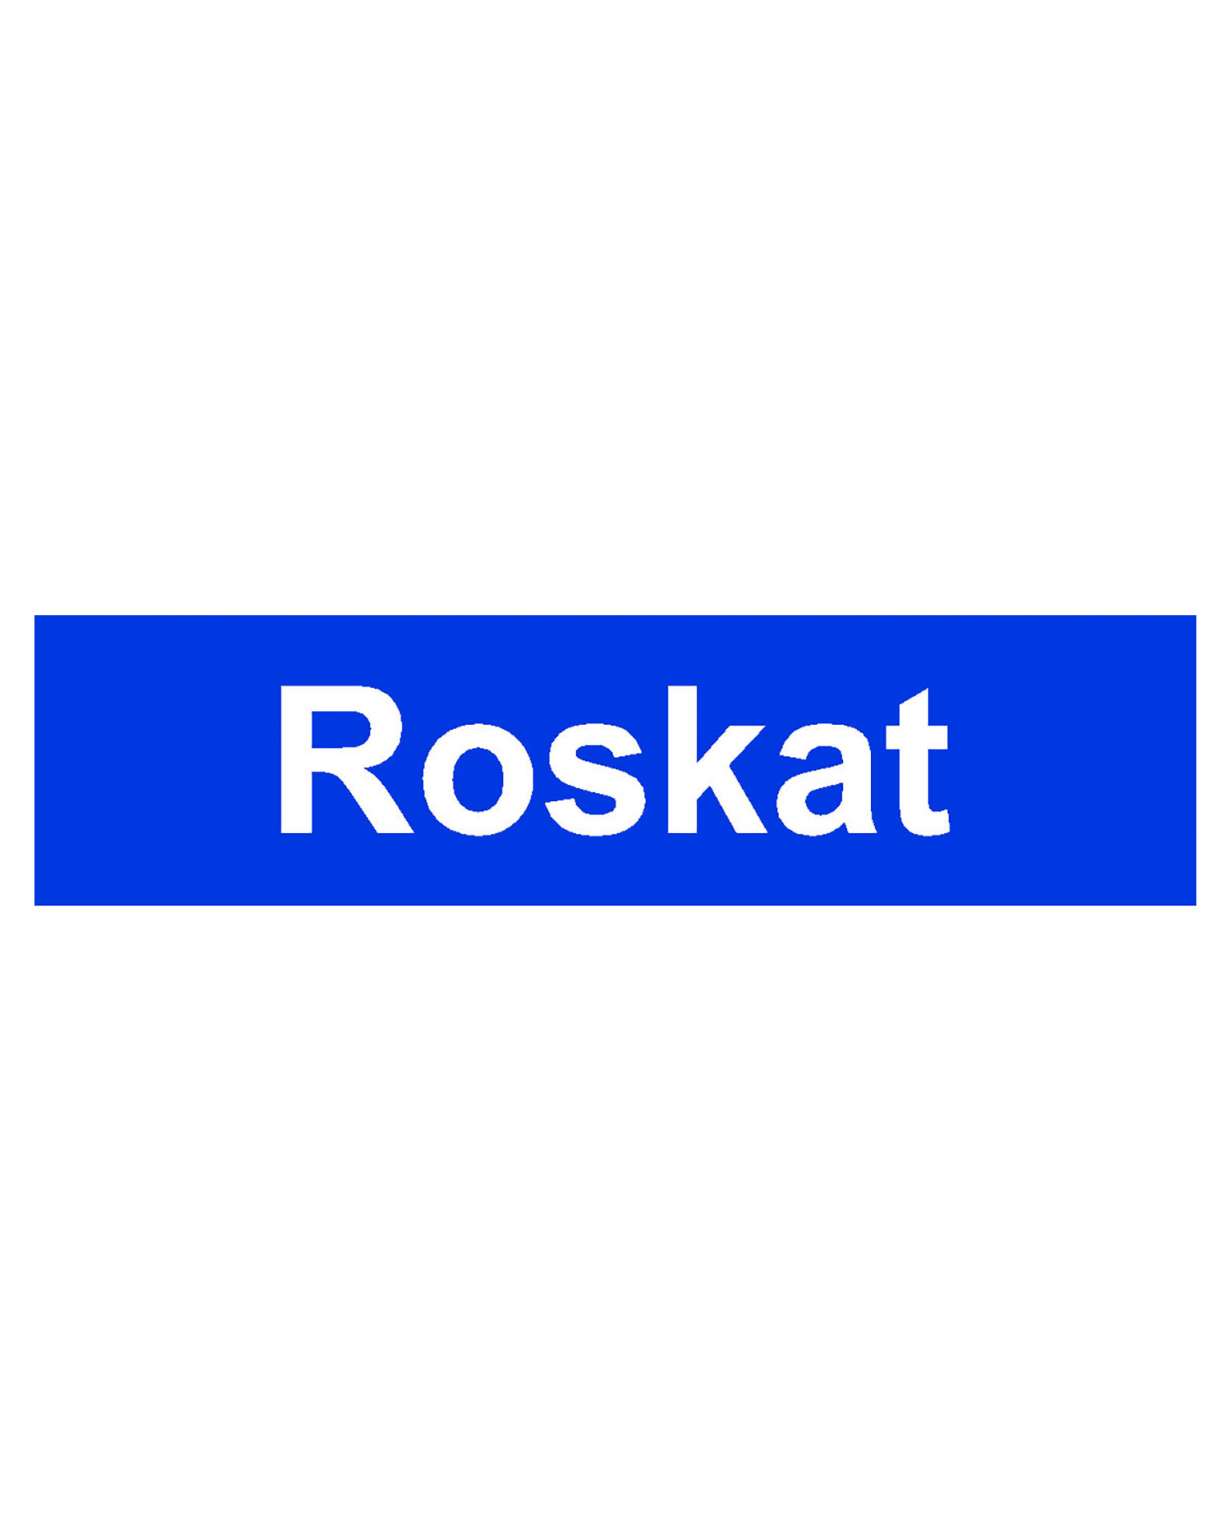 Roskat, Magneetti, 400x100 mm